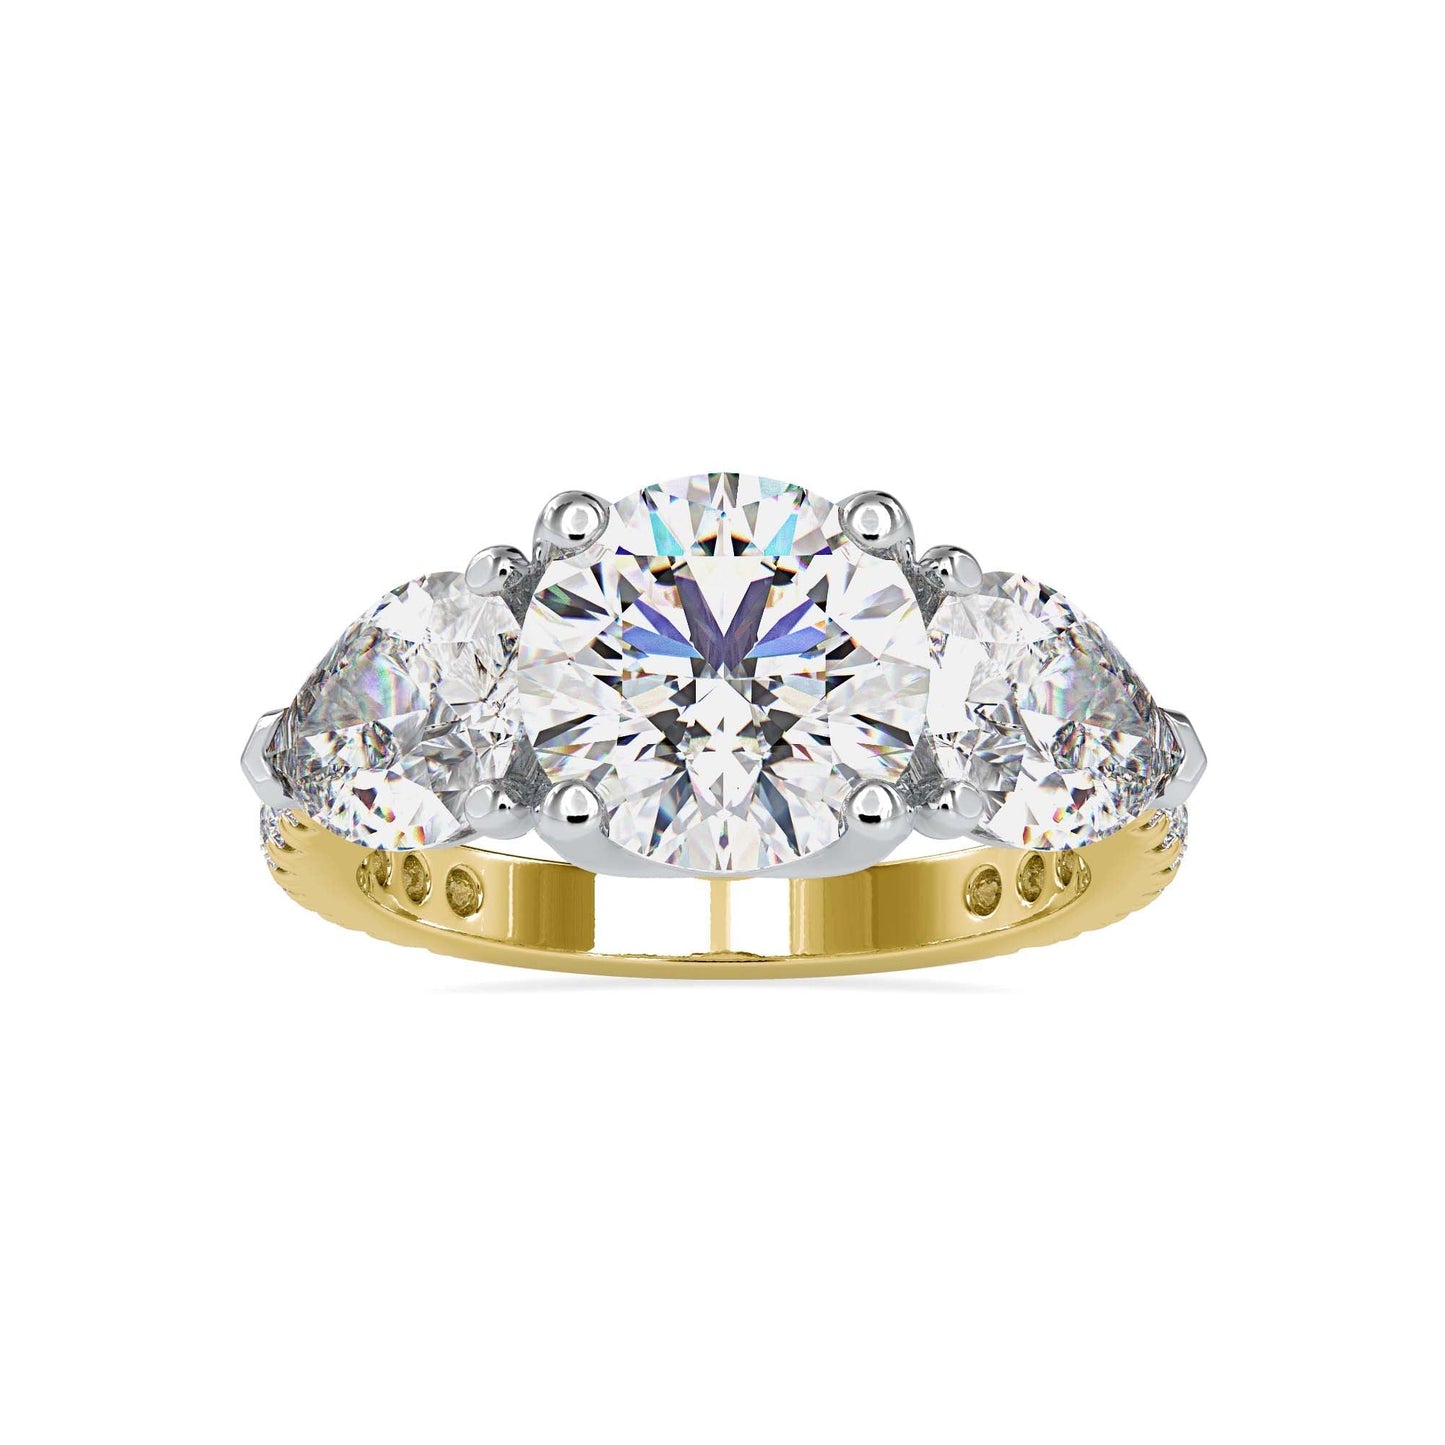 Oval 3-Stone Diamond Ring - Anthony's Jewelers - (800) 927-9030